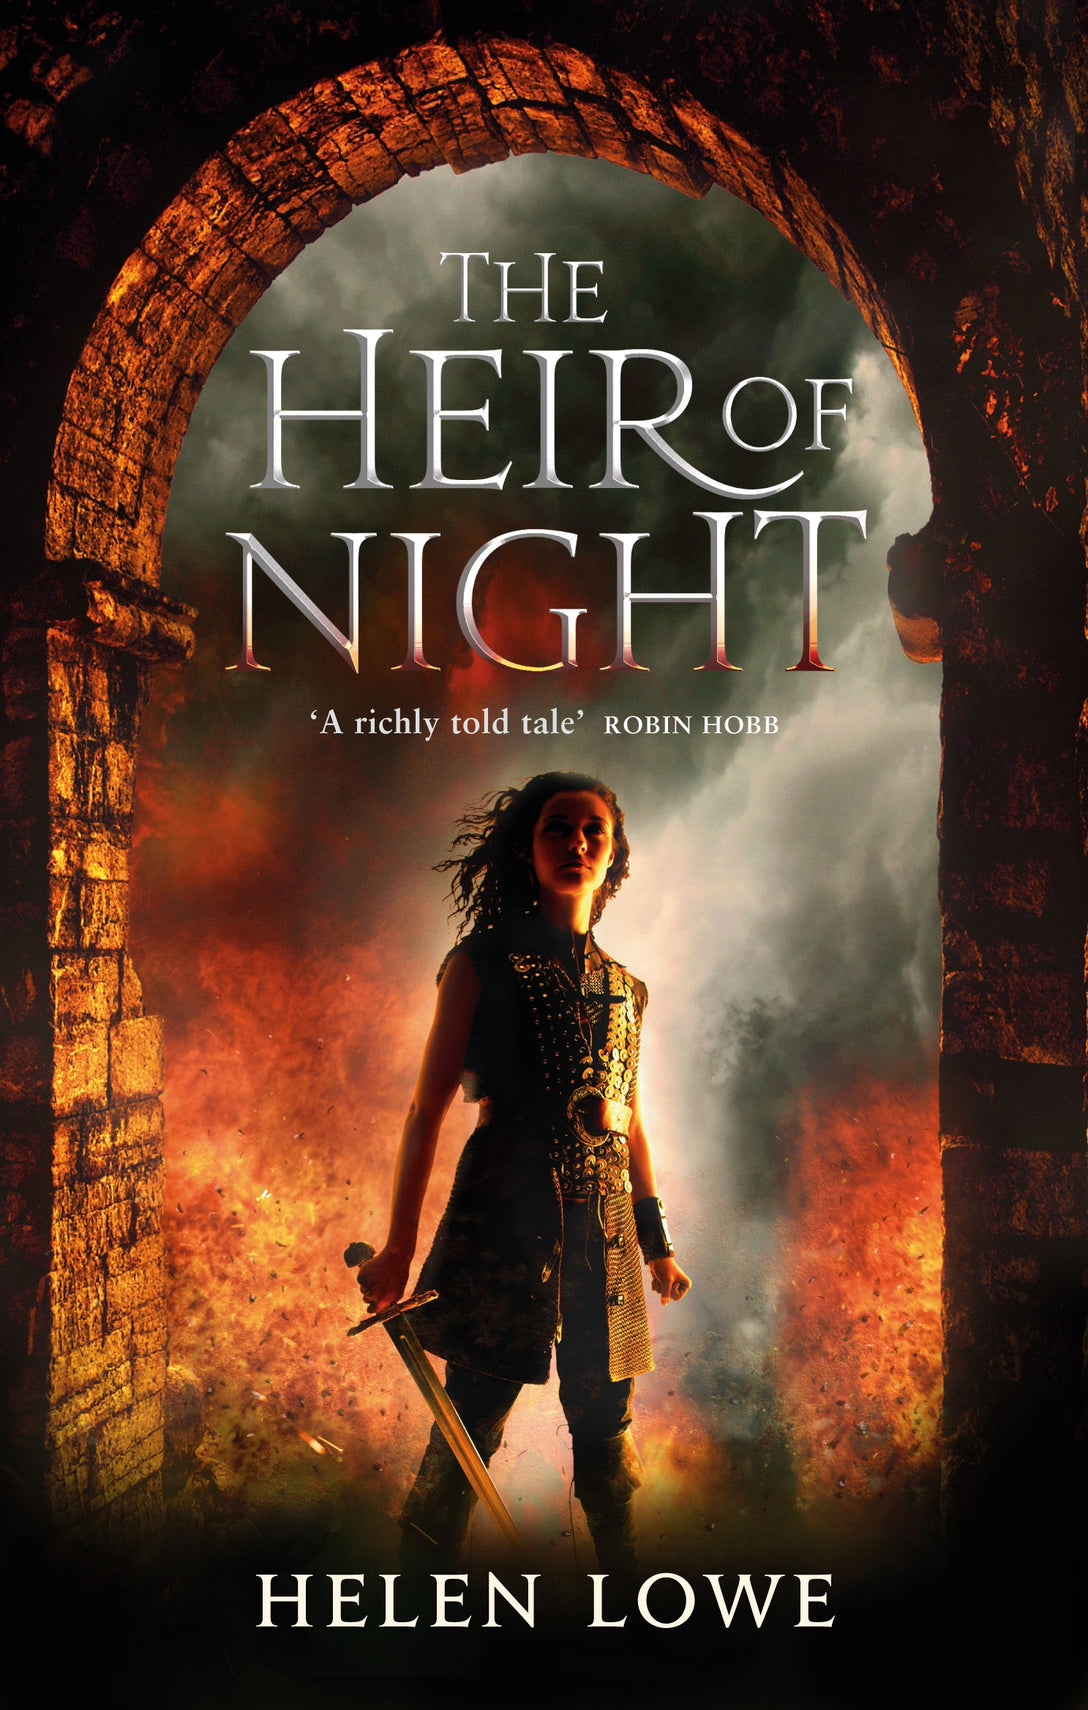 The Heir Of Night by Helen Lowe